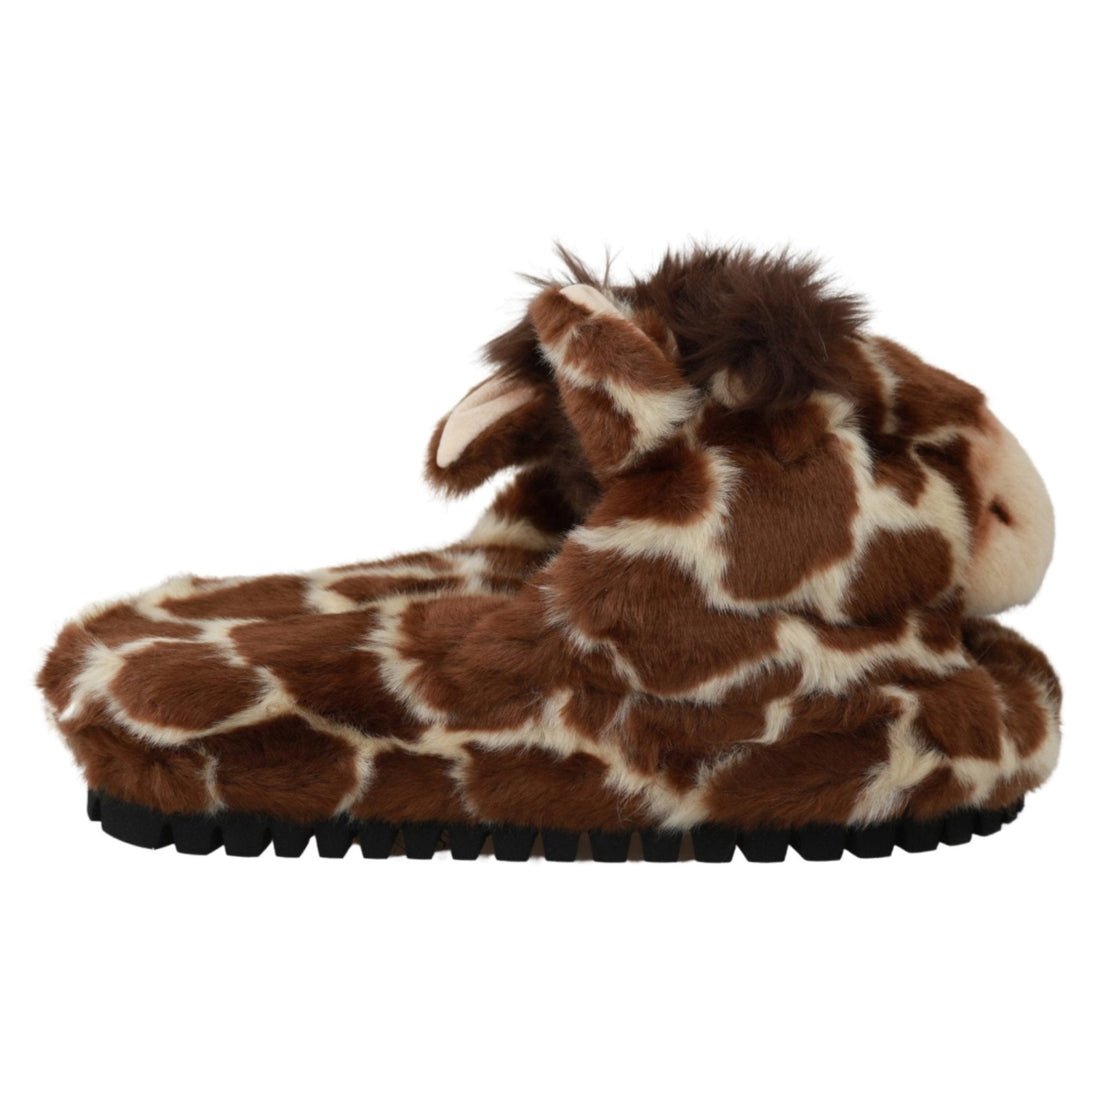 Dolce & Gabbana Brown Giraffe Slippers Flats Sandals Shoes - Paris Deluxe